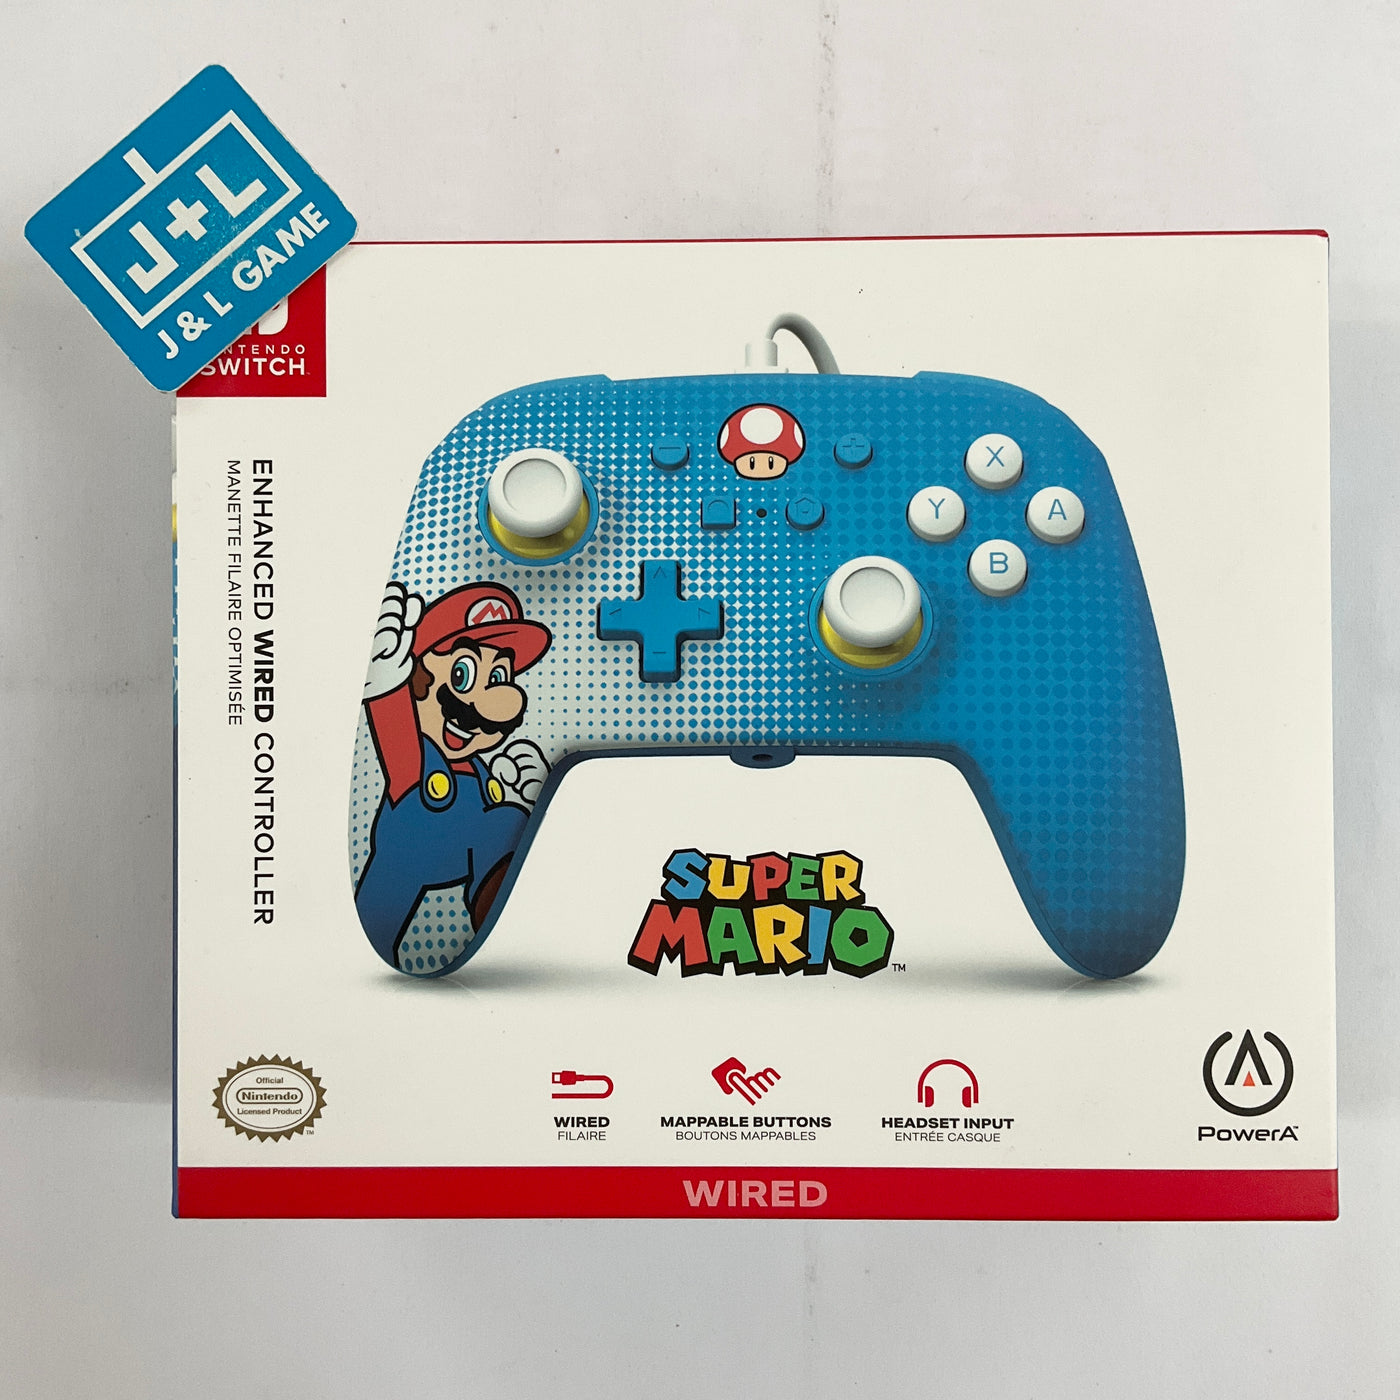 Manette PowerA Super Mario Pop pour Nintendo Switch